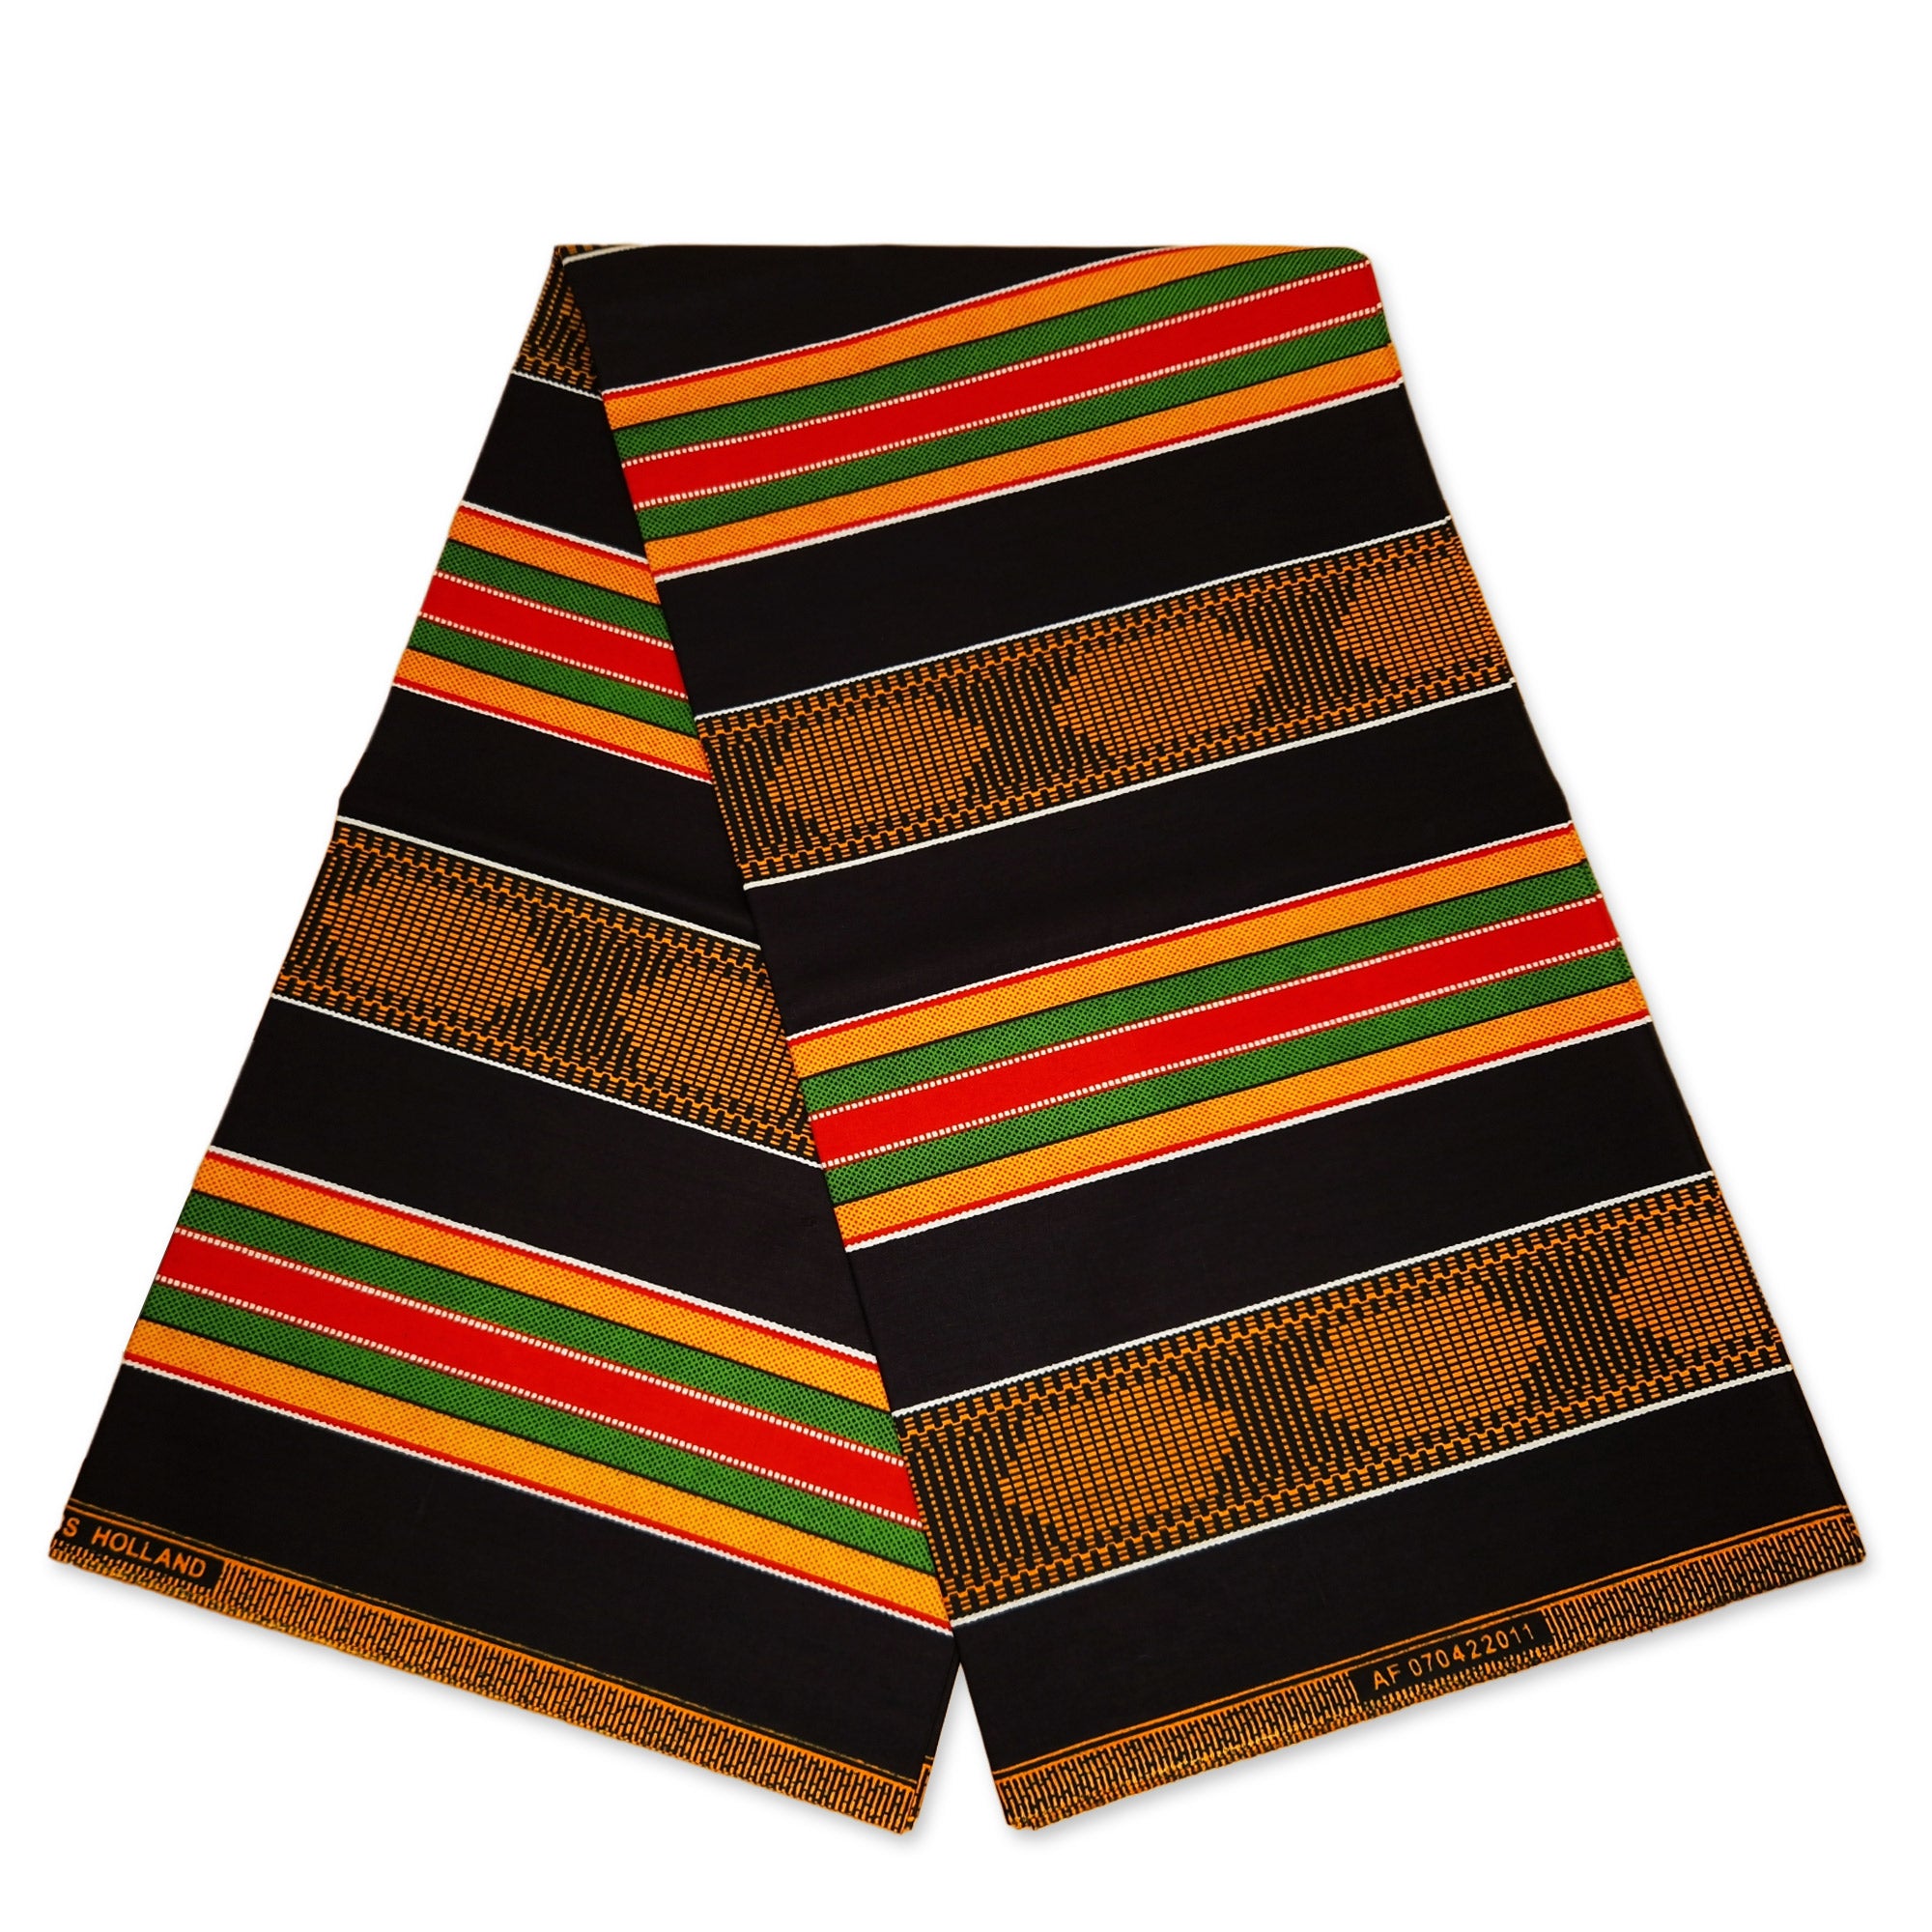 African Black / Pan African kente print fabric KENTE Ghana wax cloth AF-4046 - 100% Cotton